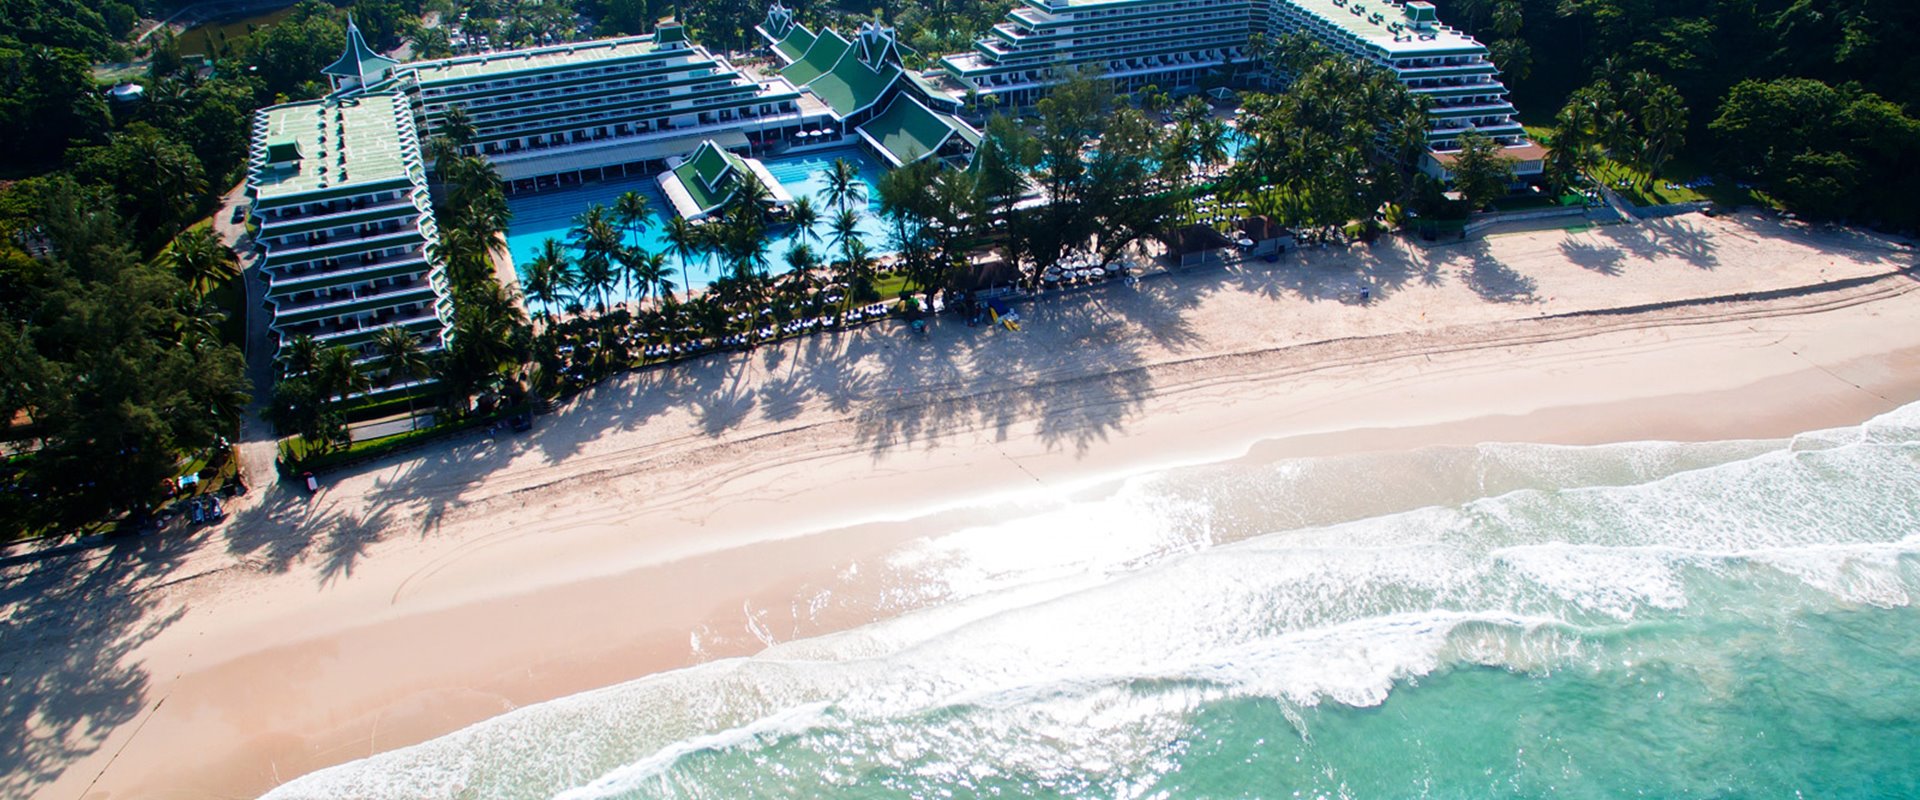 Le Meridien Phuket Beach Resort | Conference Venues Thailand